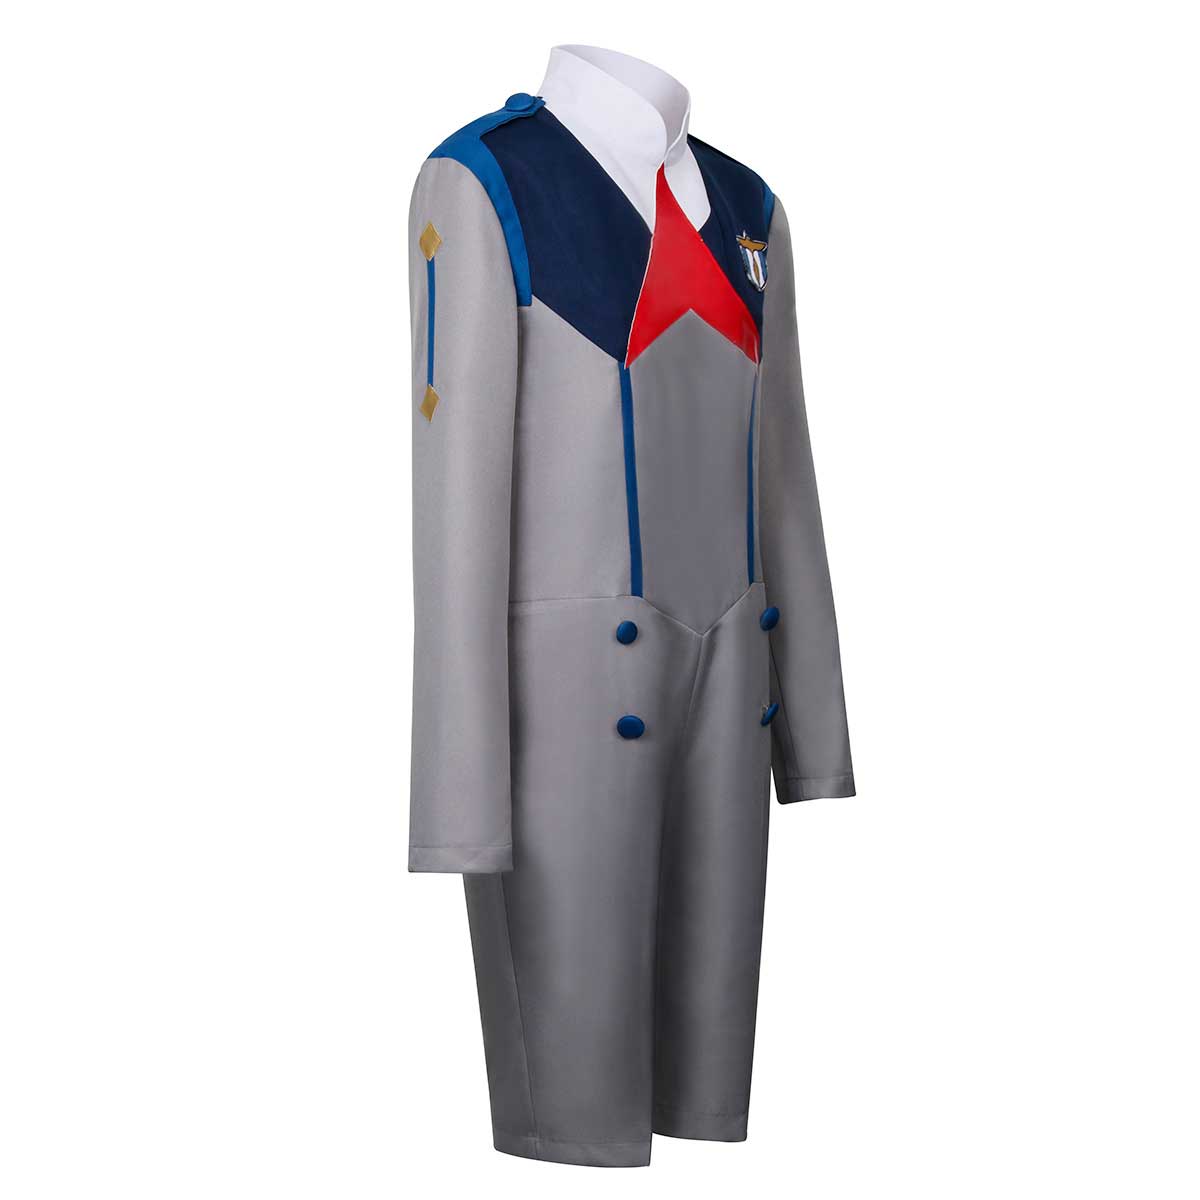 dARLING dans le FRANXX Hiro code: 016 Cosplay uniforme Costume